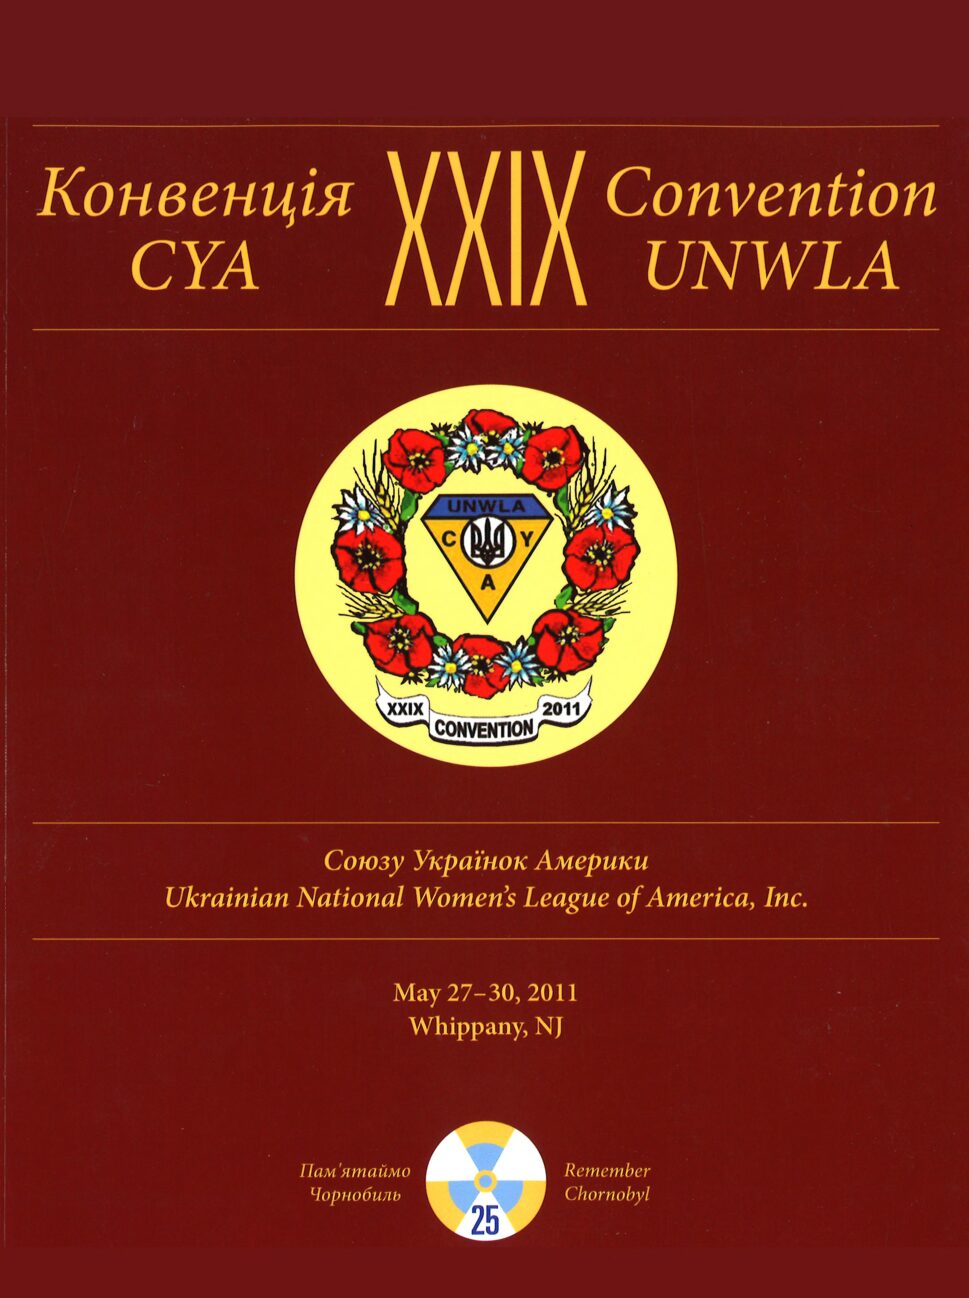 XXIX Convention - UNWLA 2011